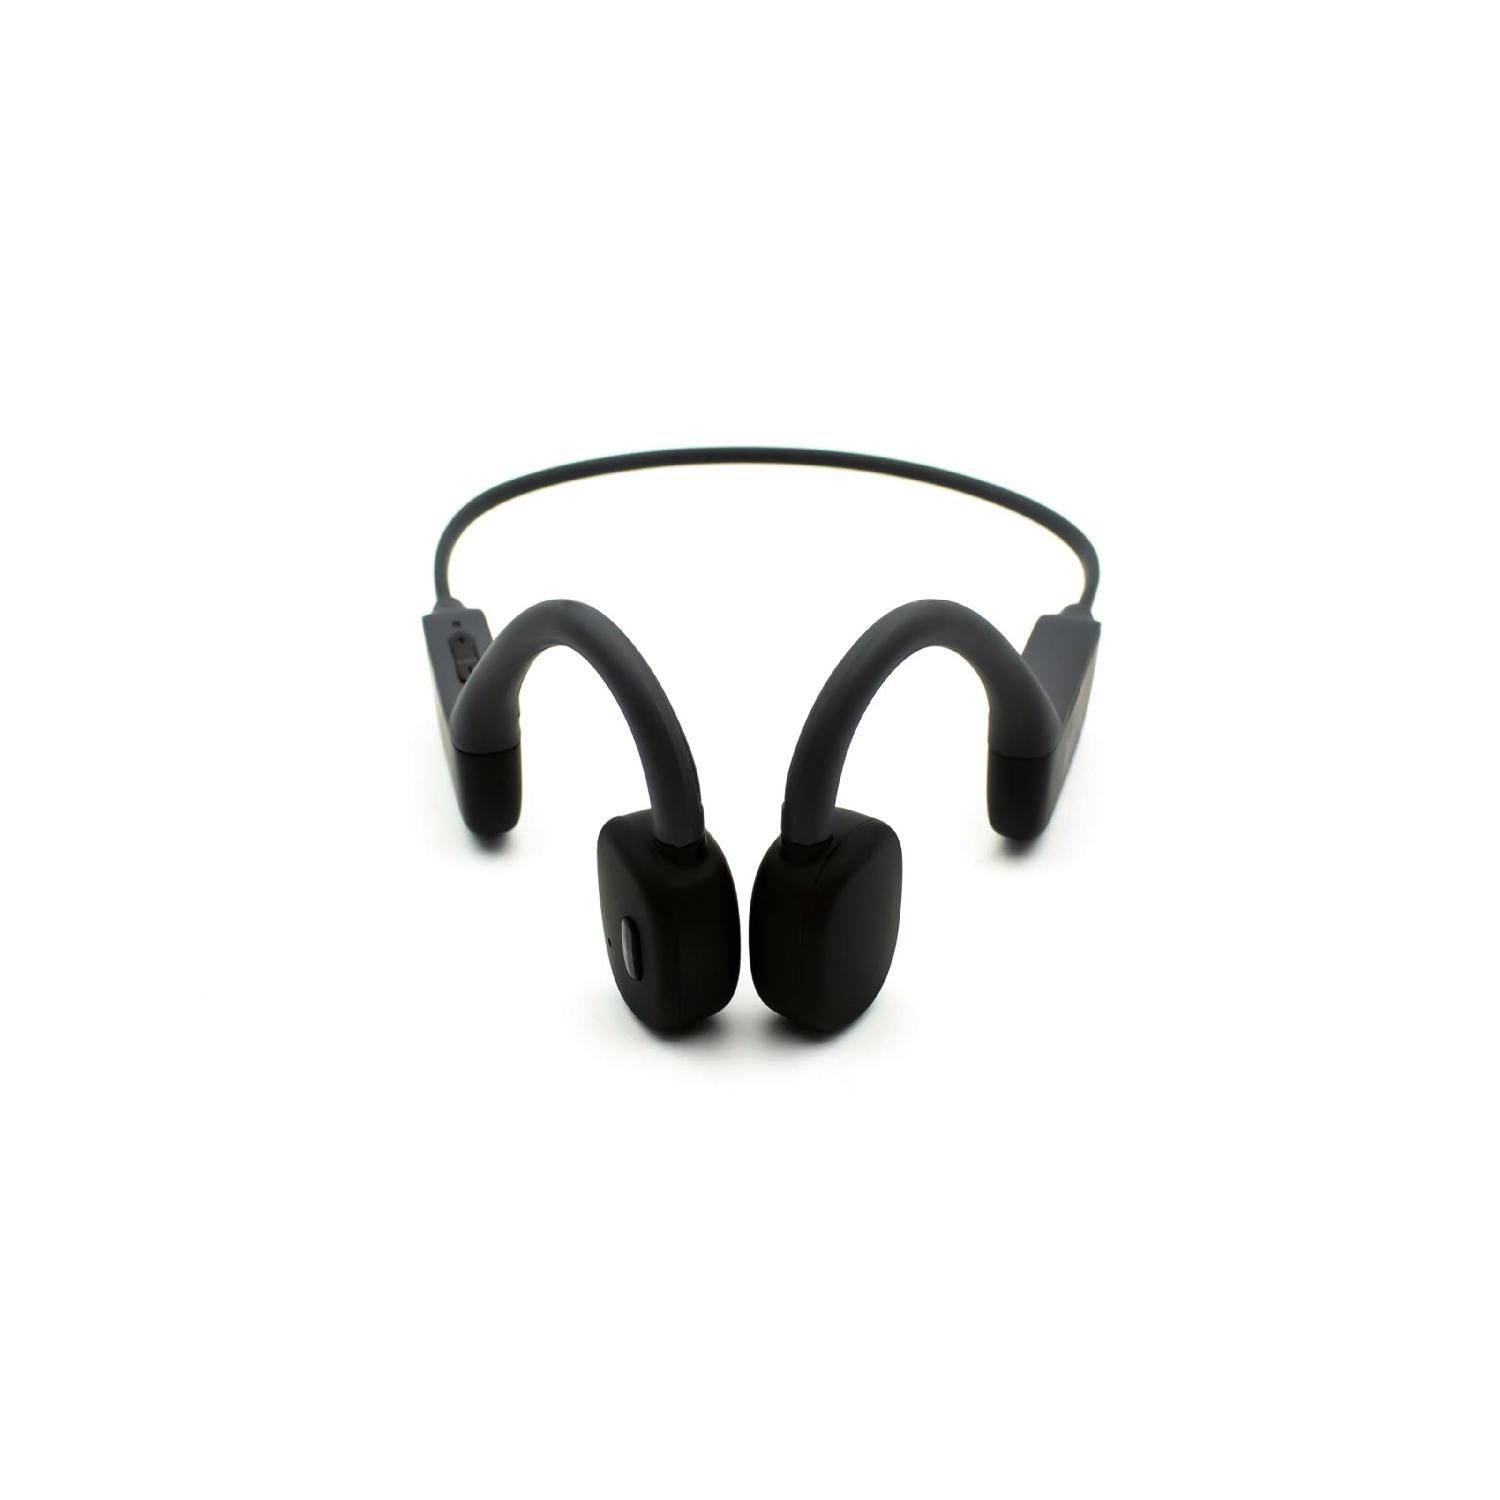 IMPERIAL bluTC active Headset schwarz Neckband 2